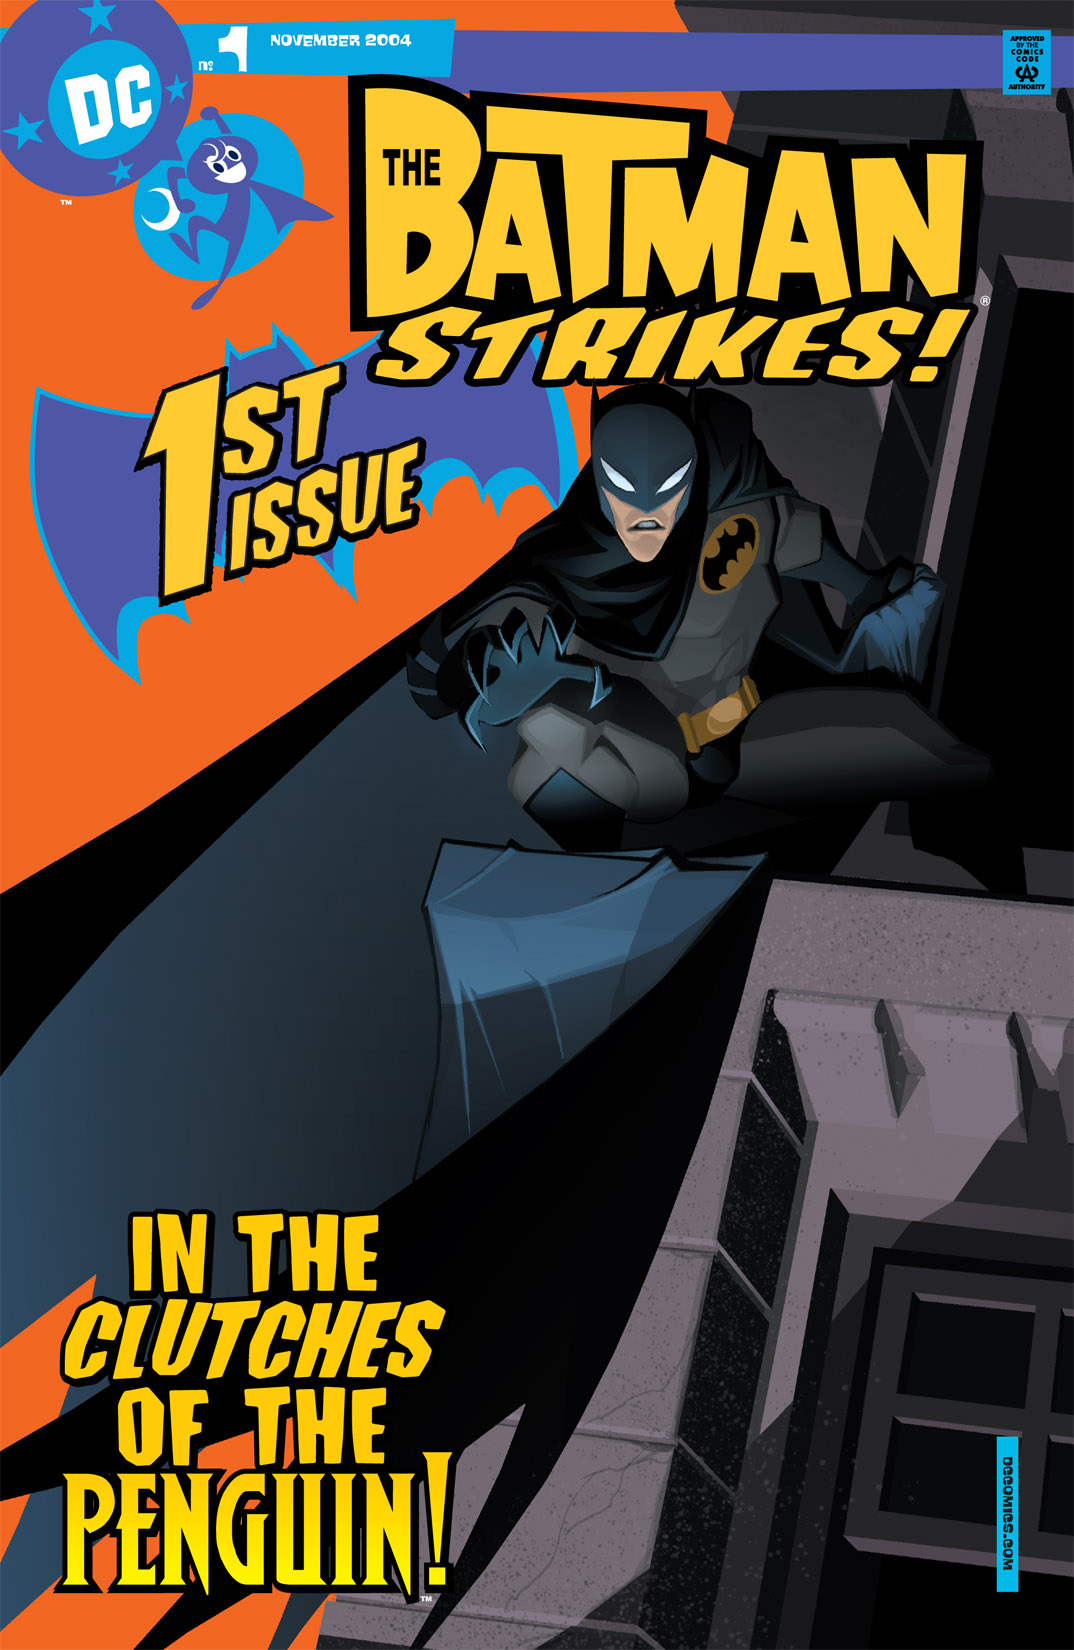 The kept man strikes back. The Batman 2004 комиксы. Бэтмен атакует. Линчеватель Бэтмен комикс. Бэтмен комикс читать.